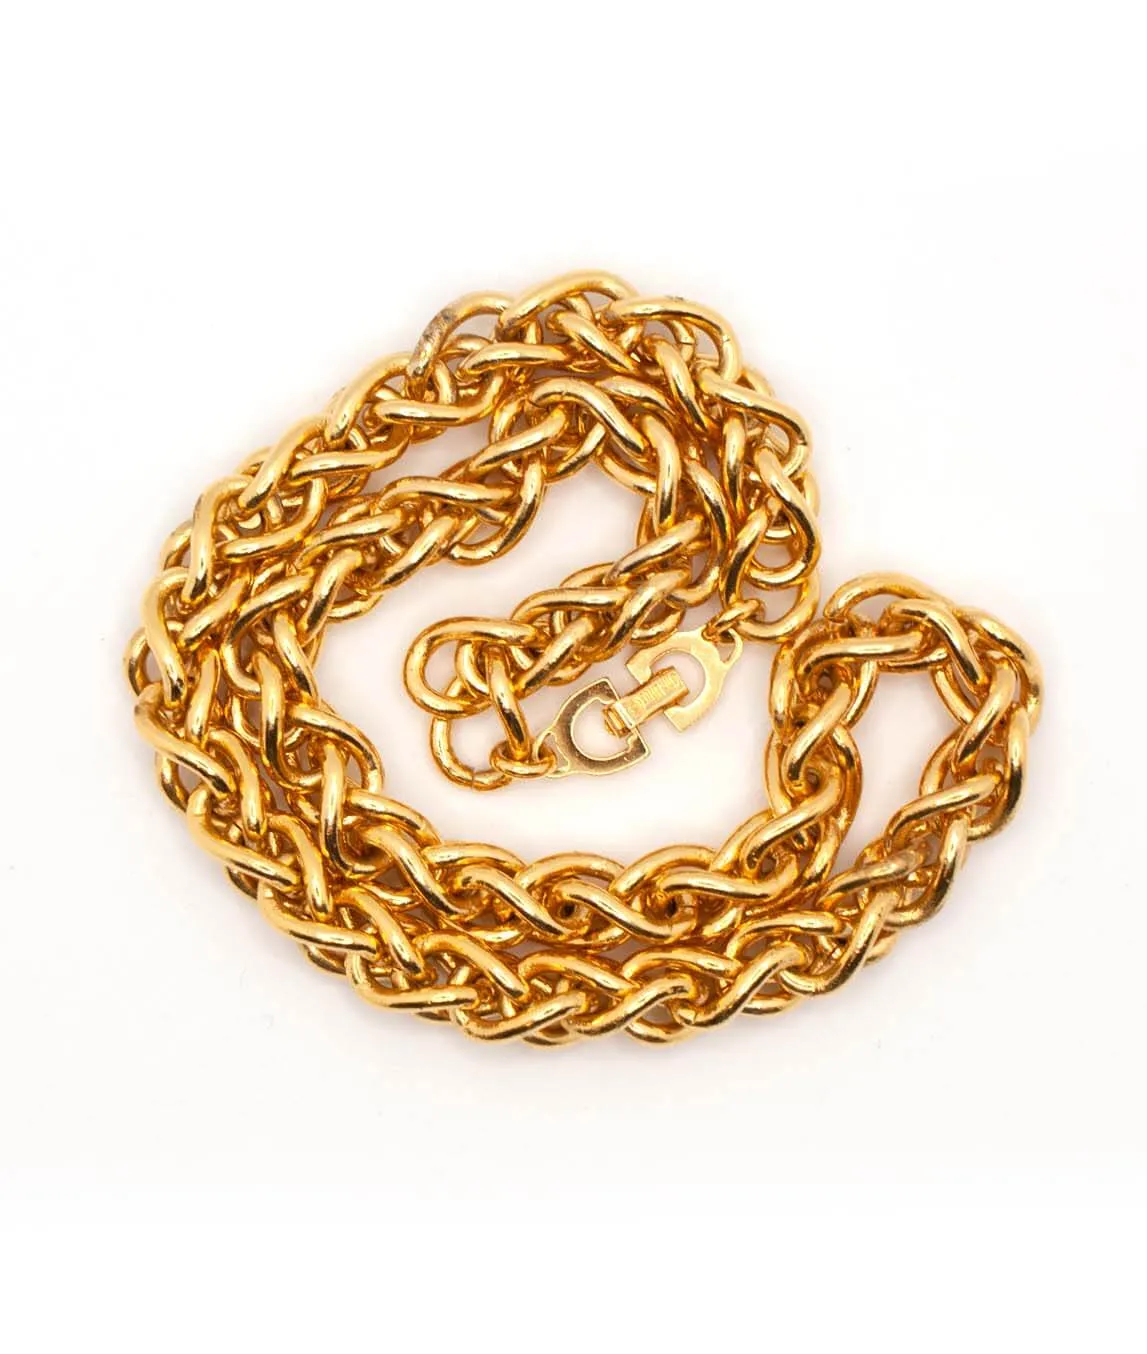 Vintage Chr Dior thick gold chain